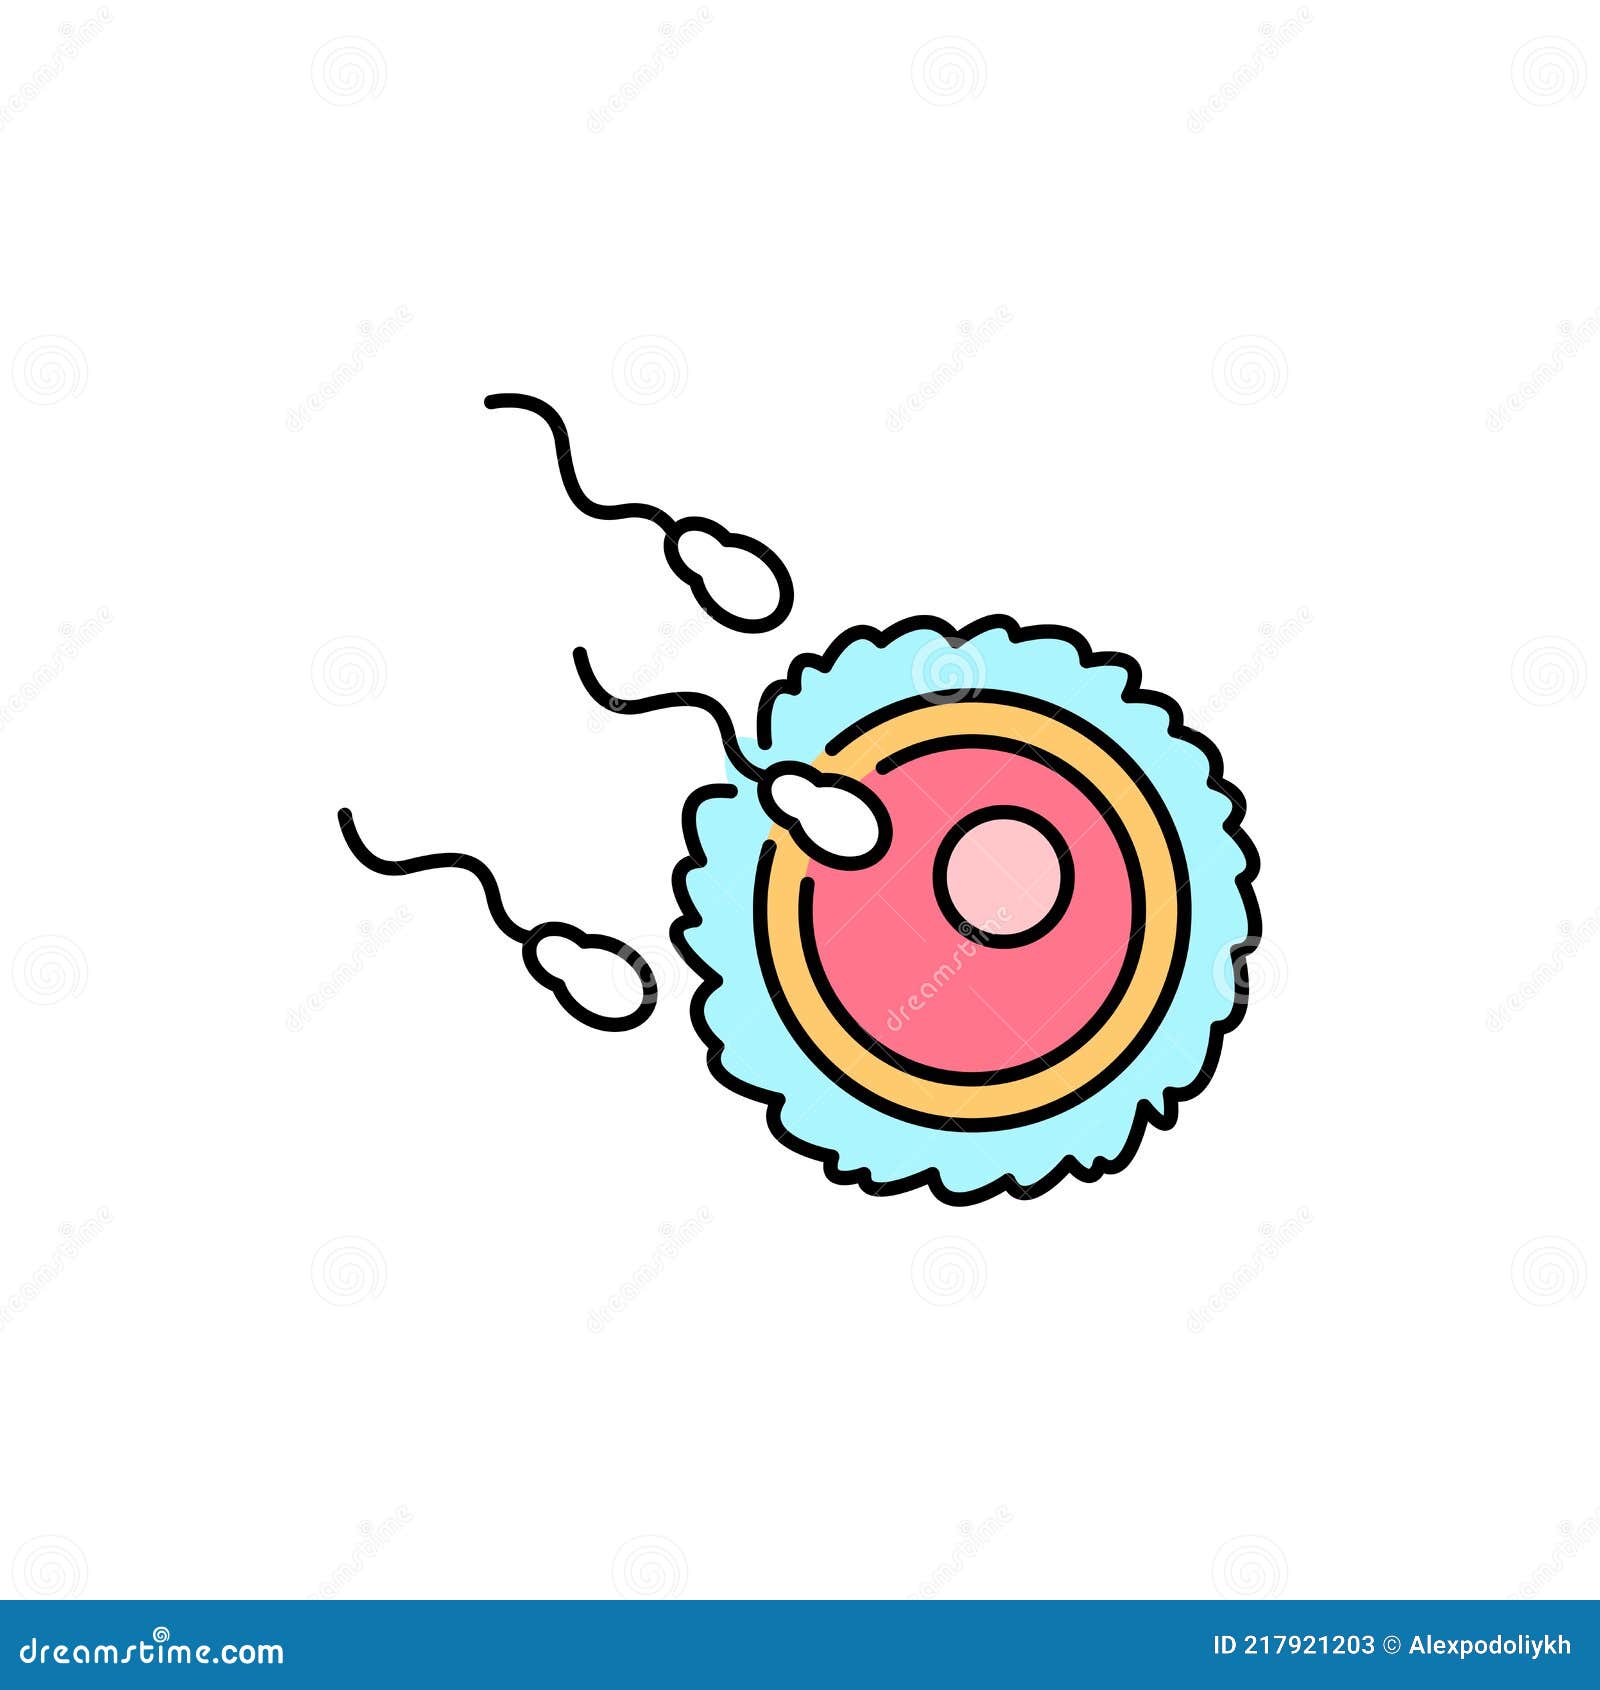 ovum fertilization olor line icon. conceiving. pictogram for web page, mobile app, promo.